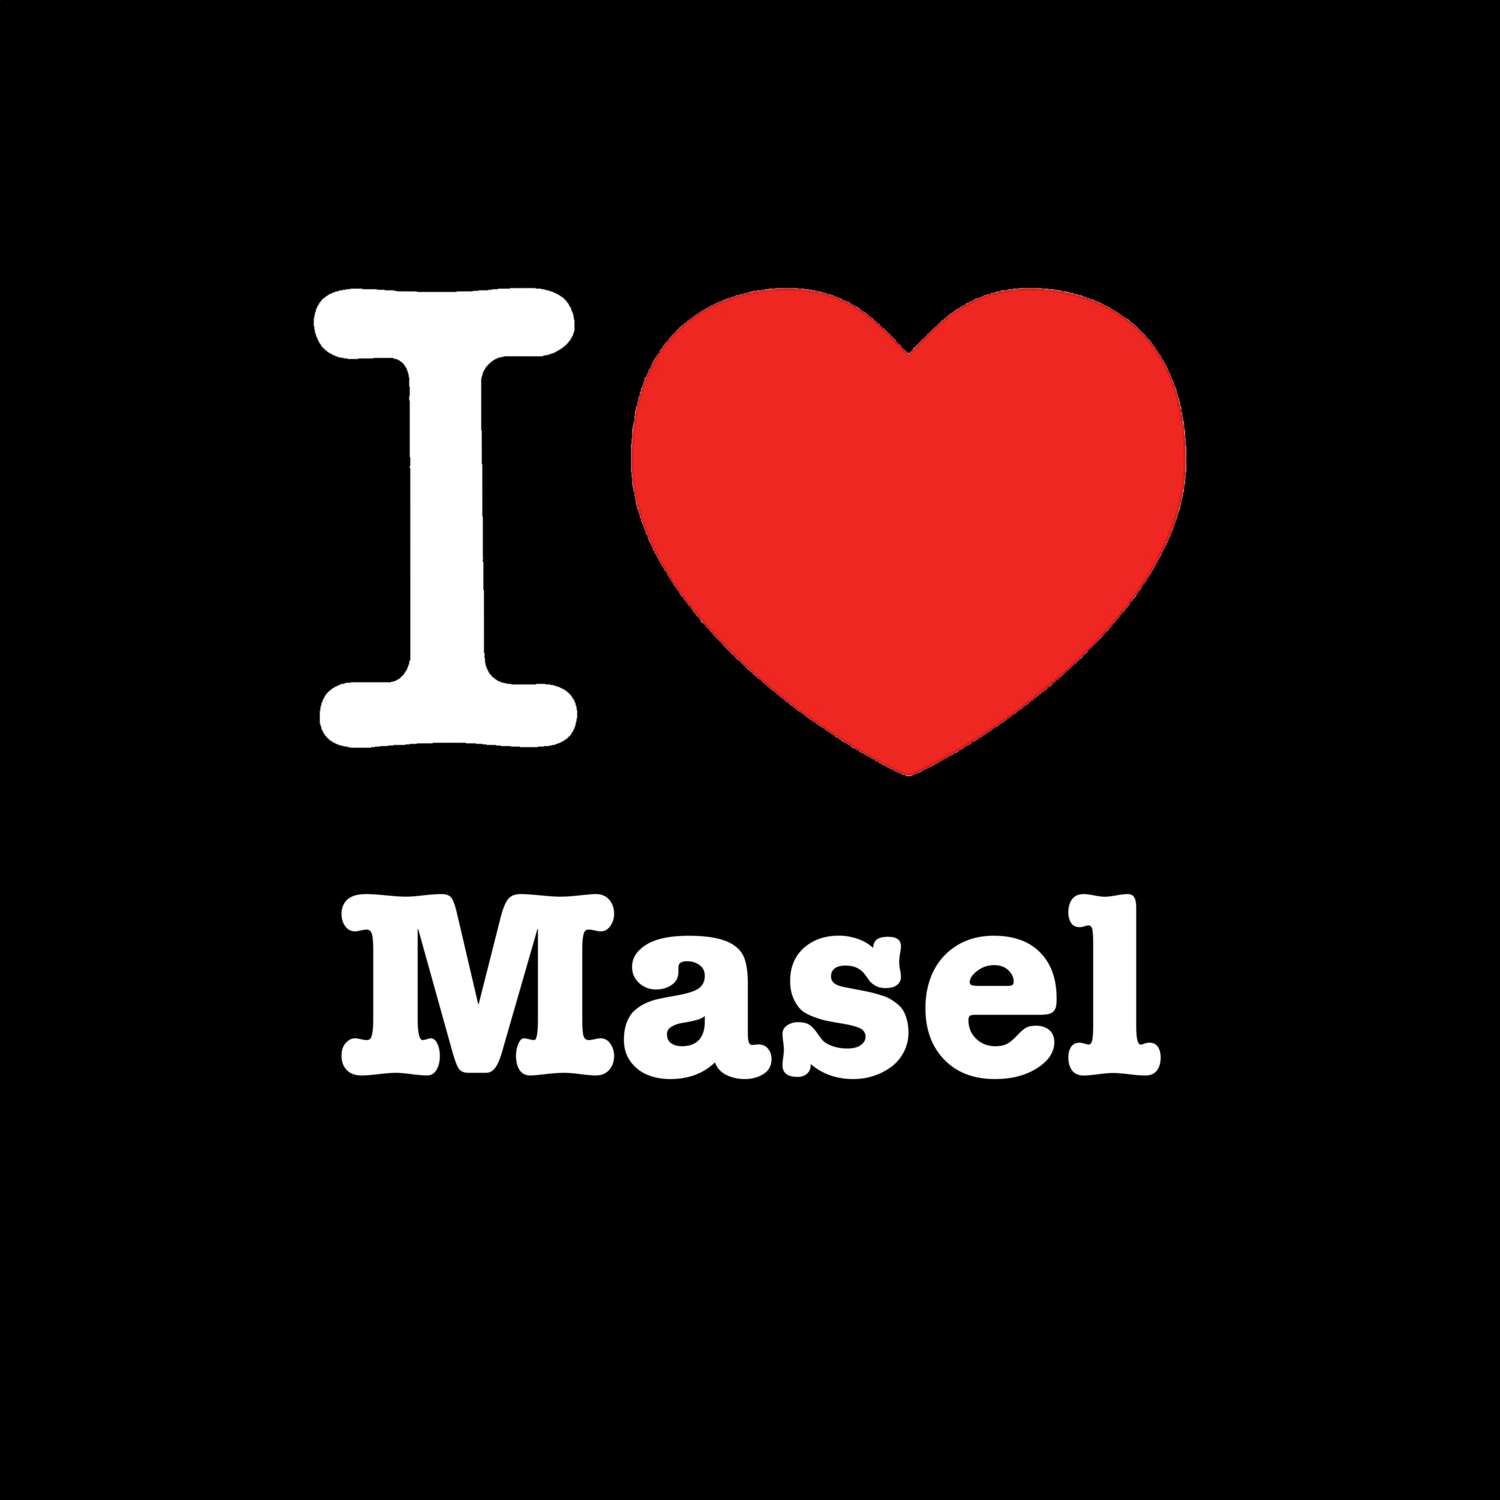 Masel T-Shirt »I love«